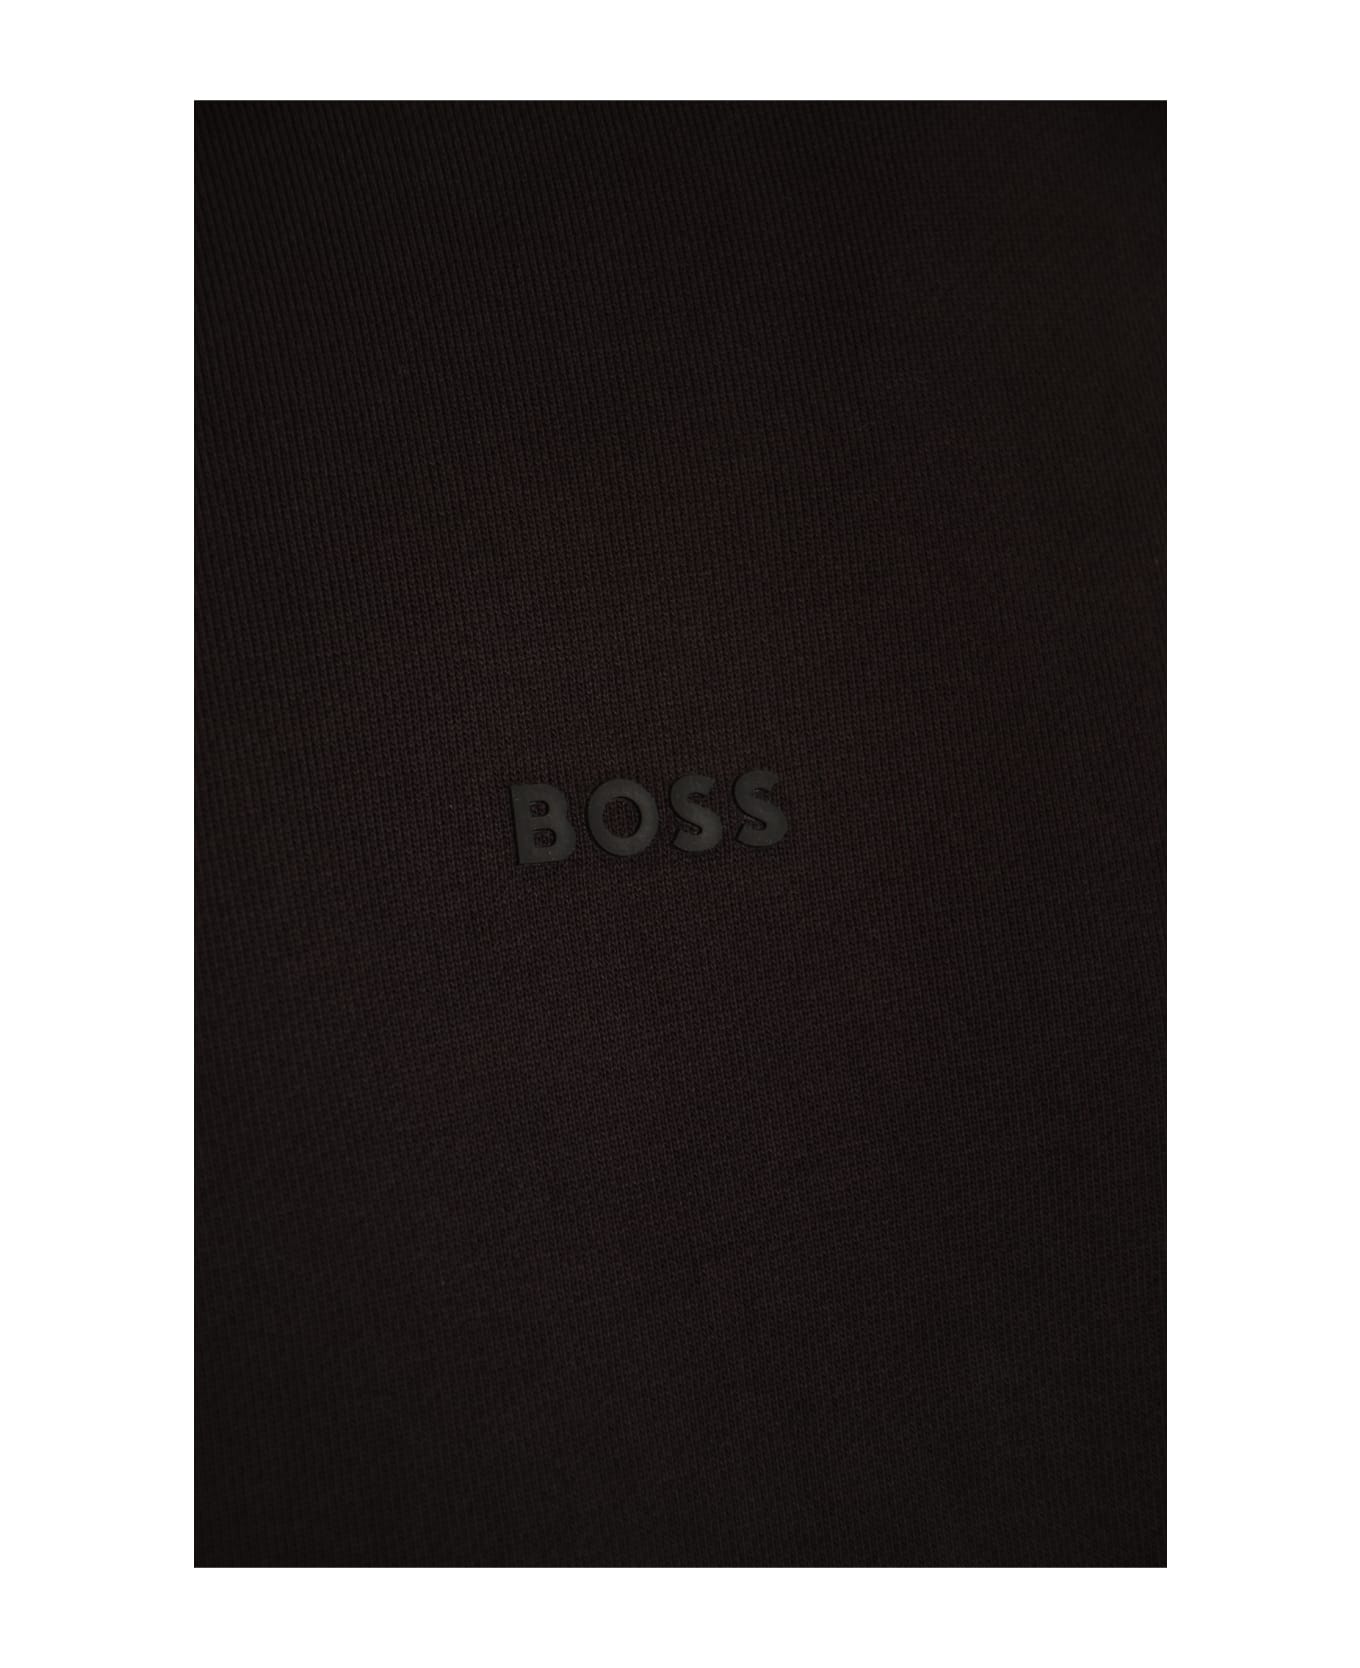 Hugo Boss Logo Sweatshirt - Black